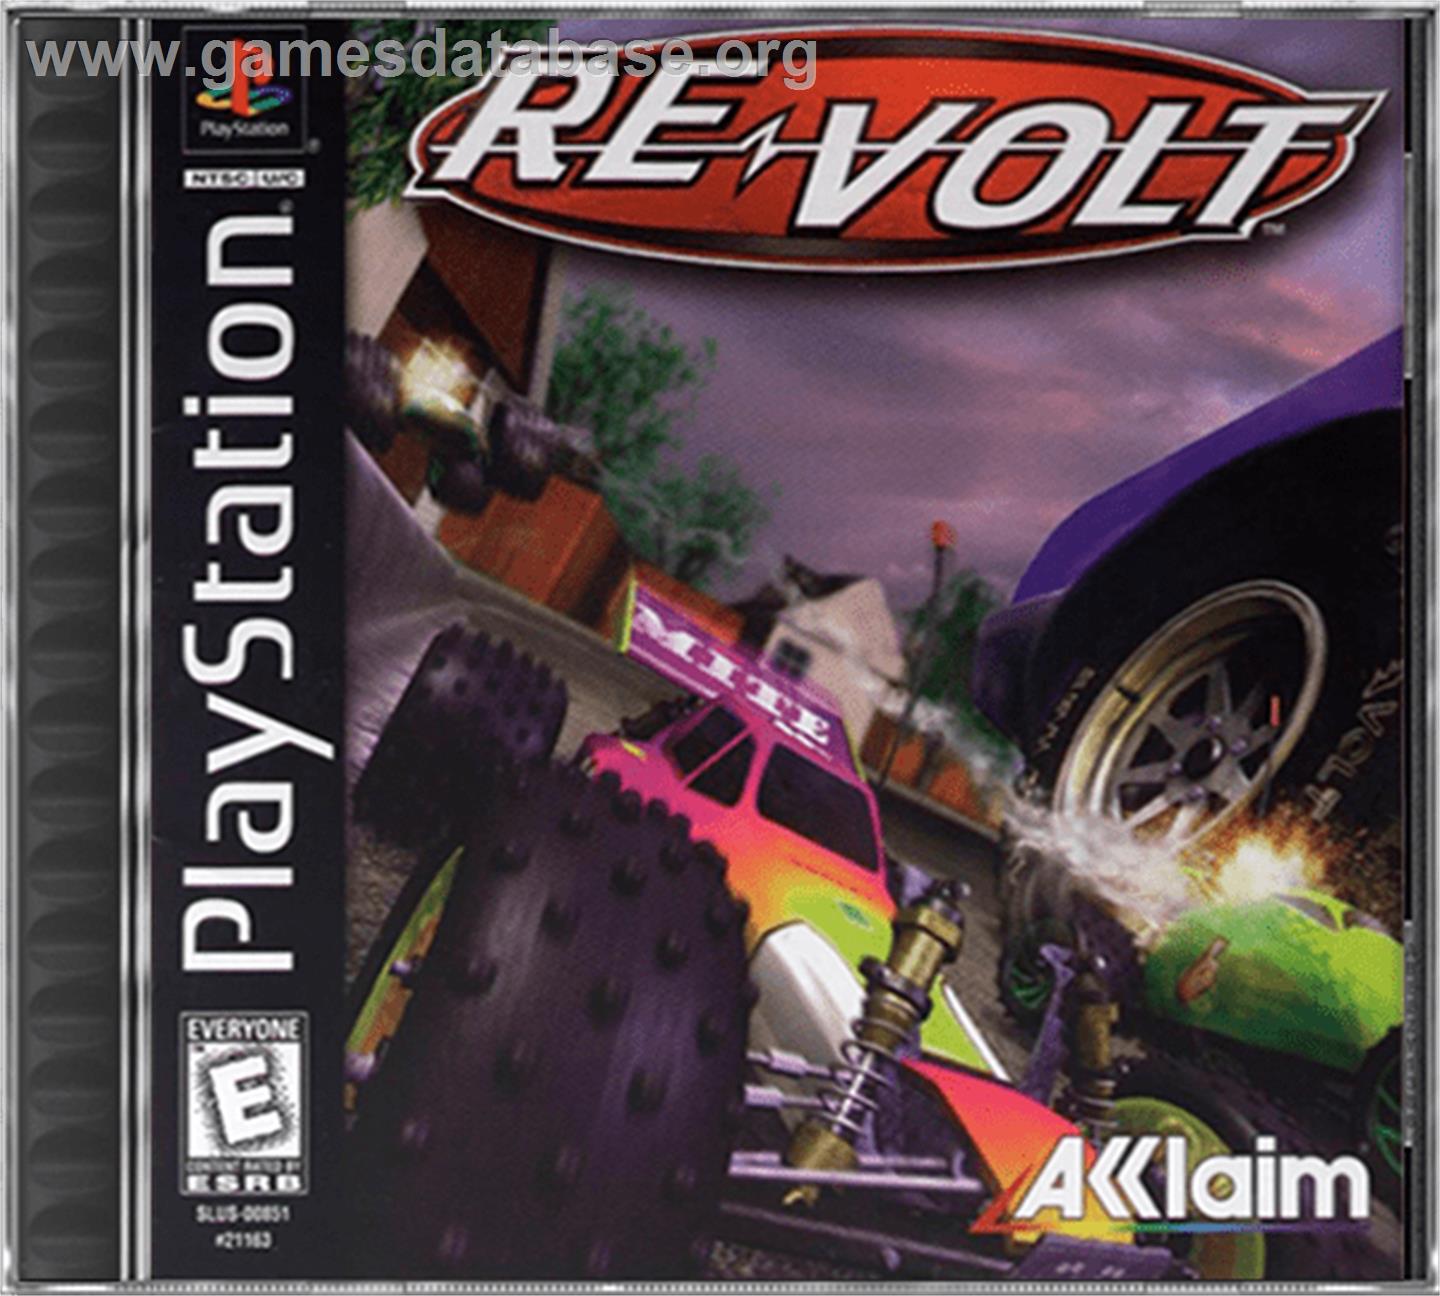 Re-Volt - Sony Playstation - Artwork - Box